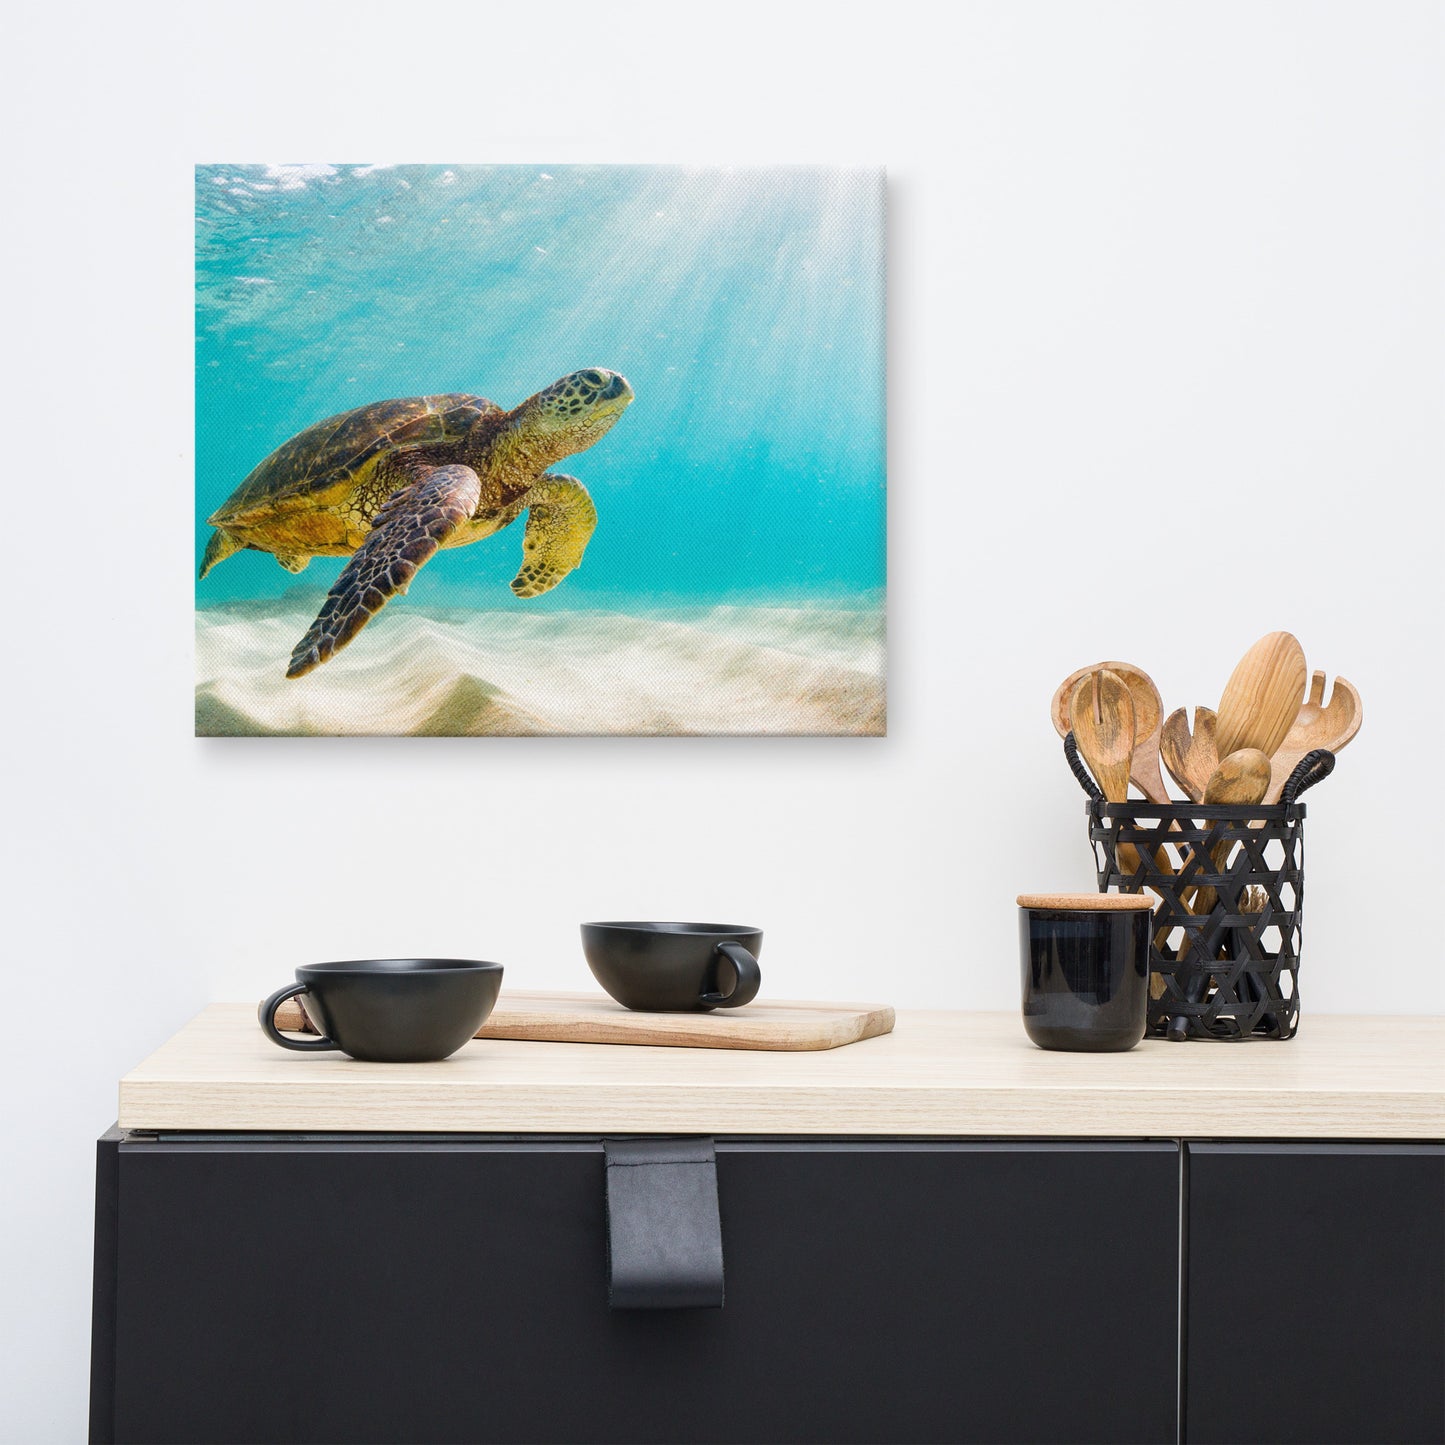 Hawaiian Green Sea Turtle In Turquoise Blue Sea and Sandbars Animal Wildlife Photograph Canvas Wall Art Print